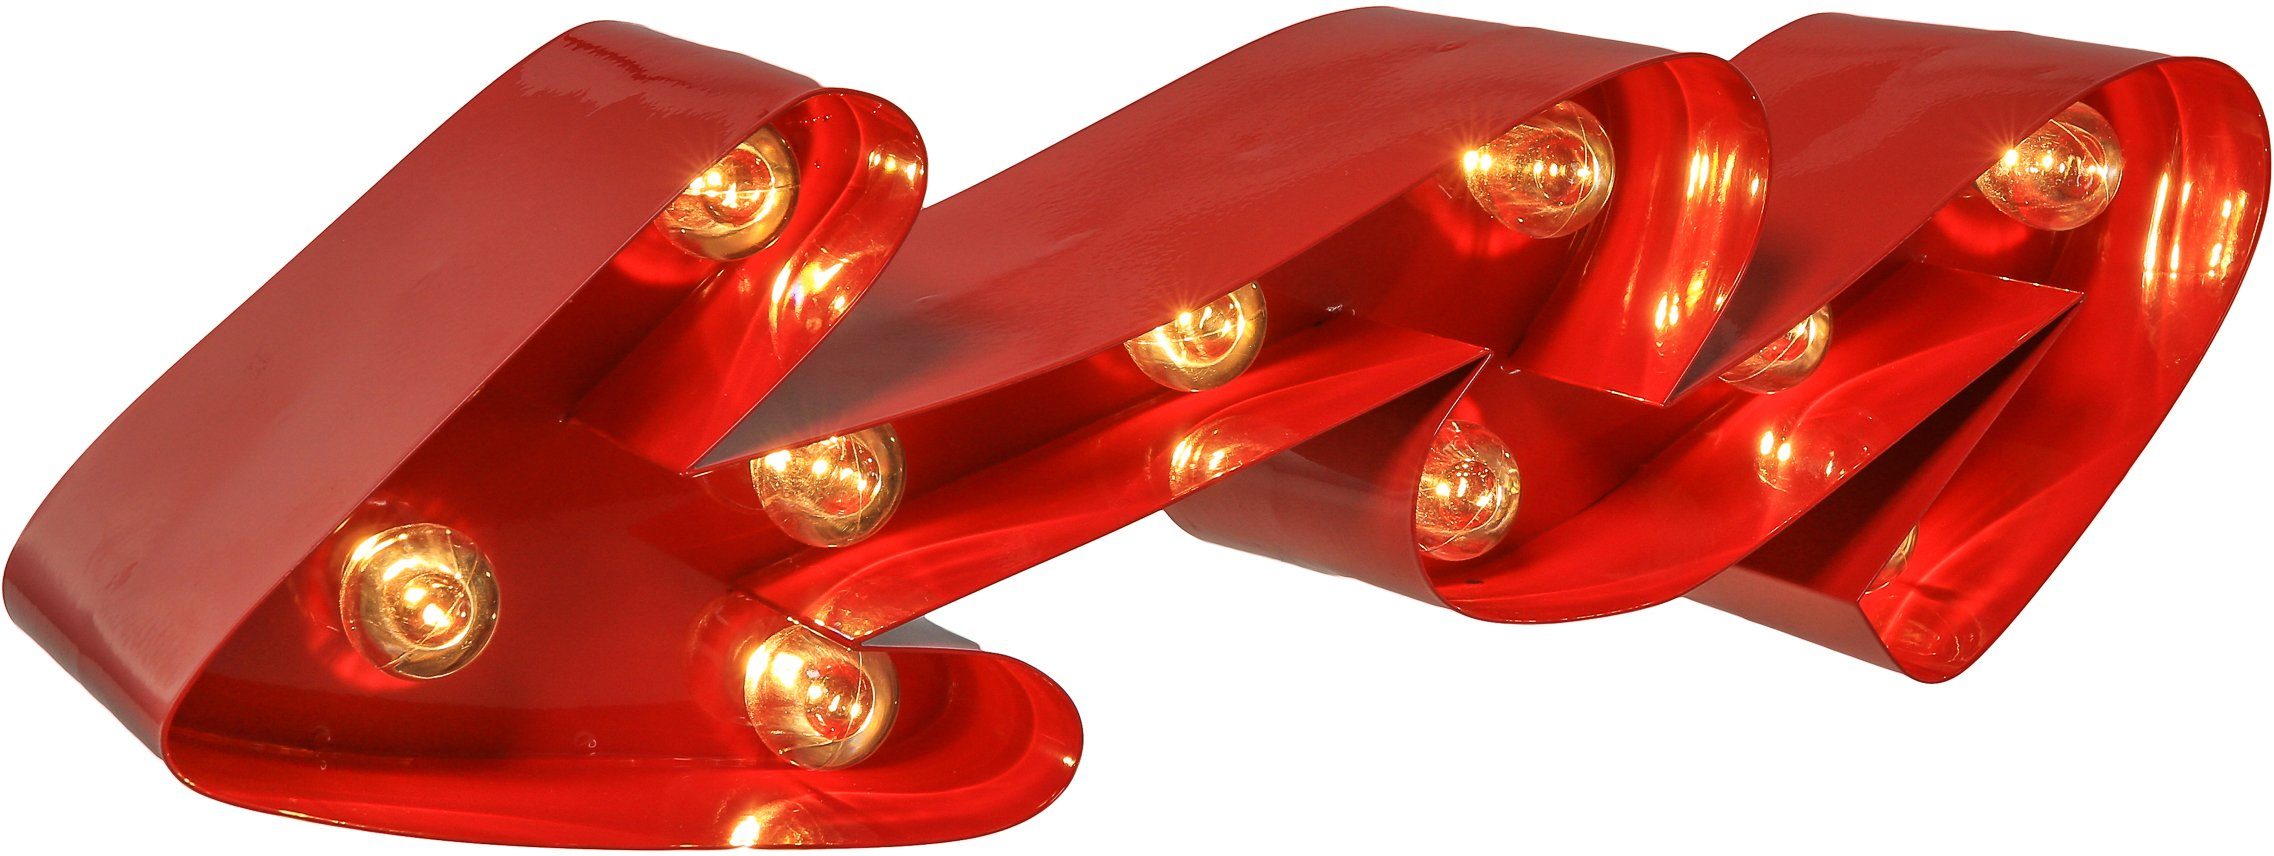 MARQUEE LIGHTS LED Dekolicht Curved Arrow, LED fest integriert, Warmweiß, Wandlampe, Tischlampe Curved Arrow mit 10 festverbauten LEDs - 38x12cm | Leuchtfiguren